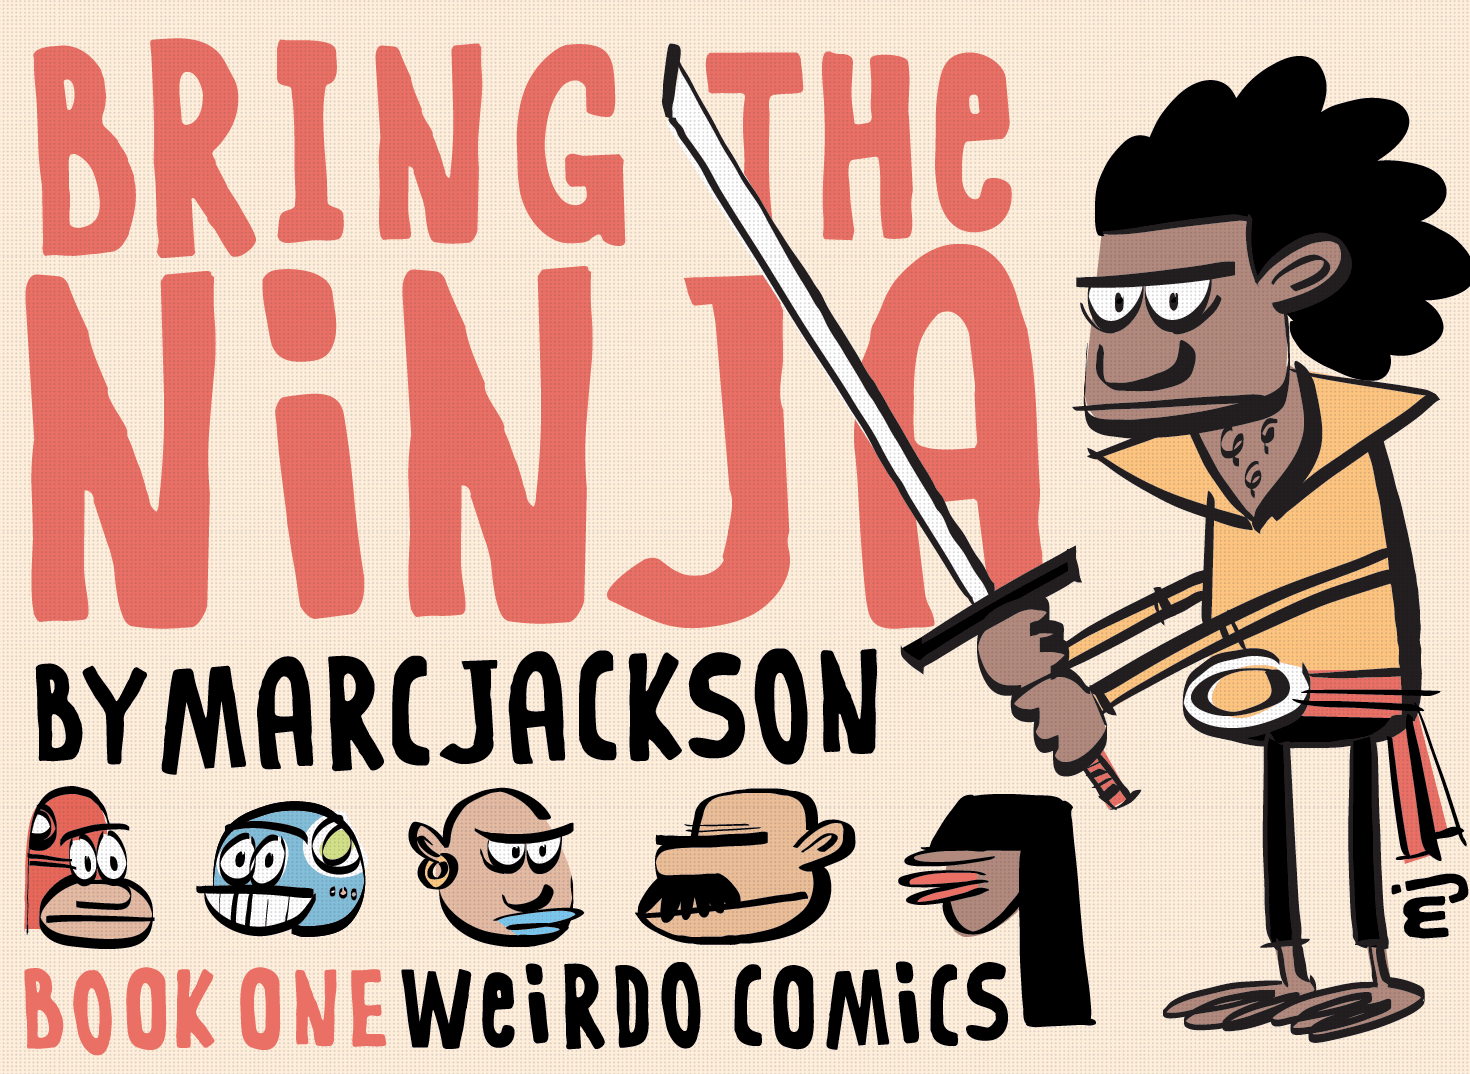 Marc Jackson's 'Bring the Ninja' review